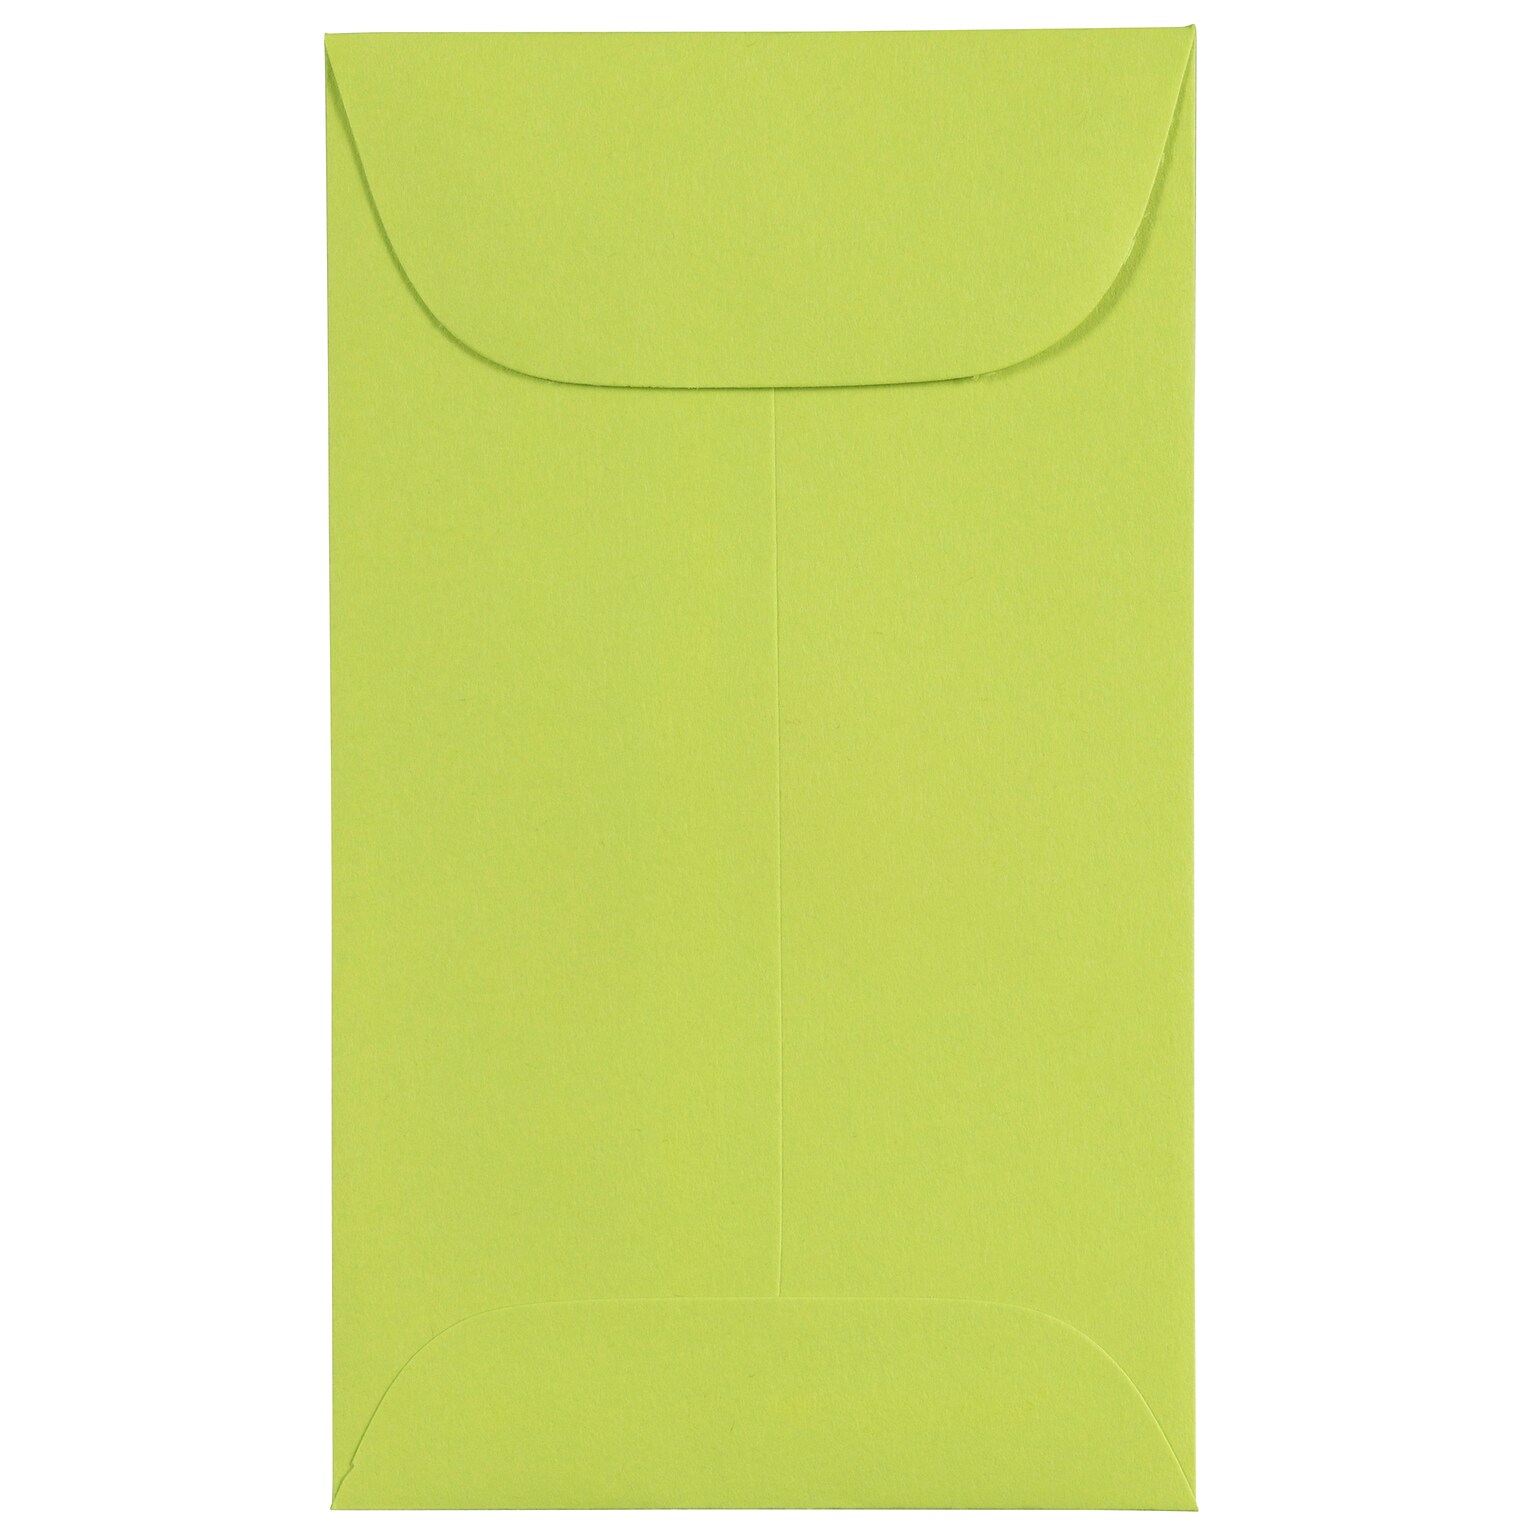 JAM Paper #3 Coin Business Colored Envelopes, 2.5 x 4.25, Ultra Lime Green, Bulk 500/Box (356730536H)